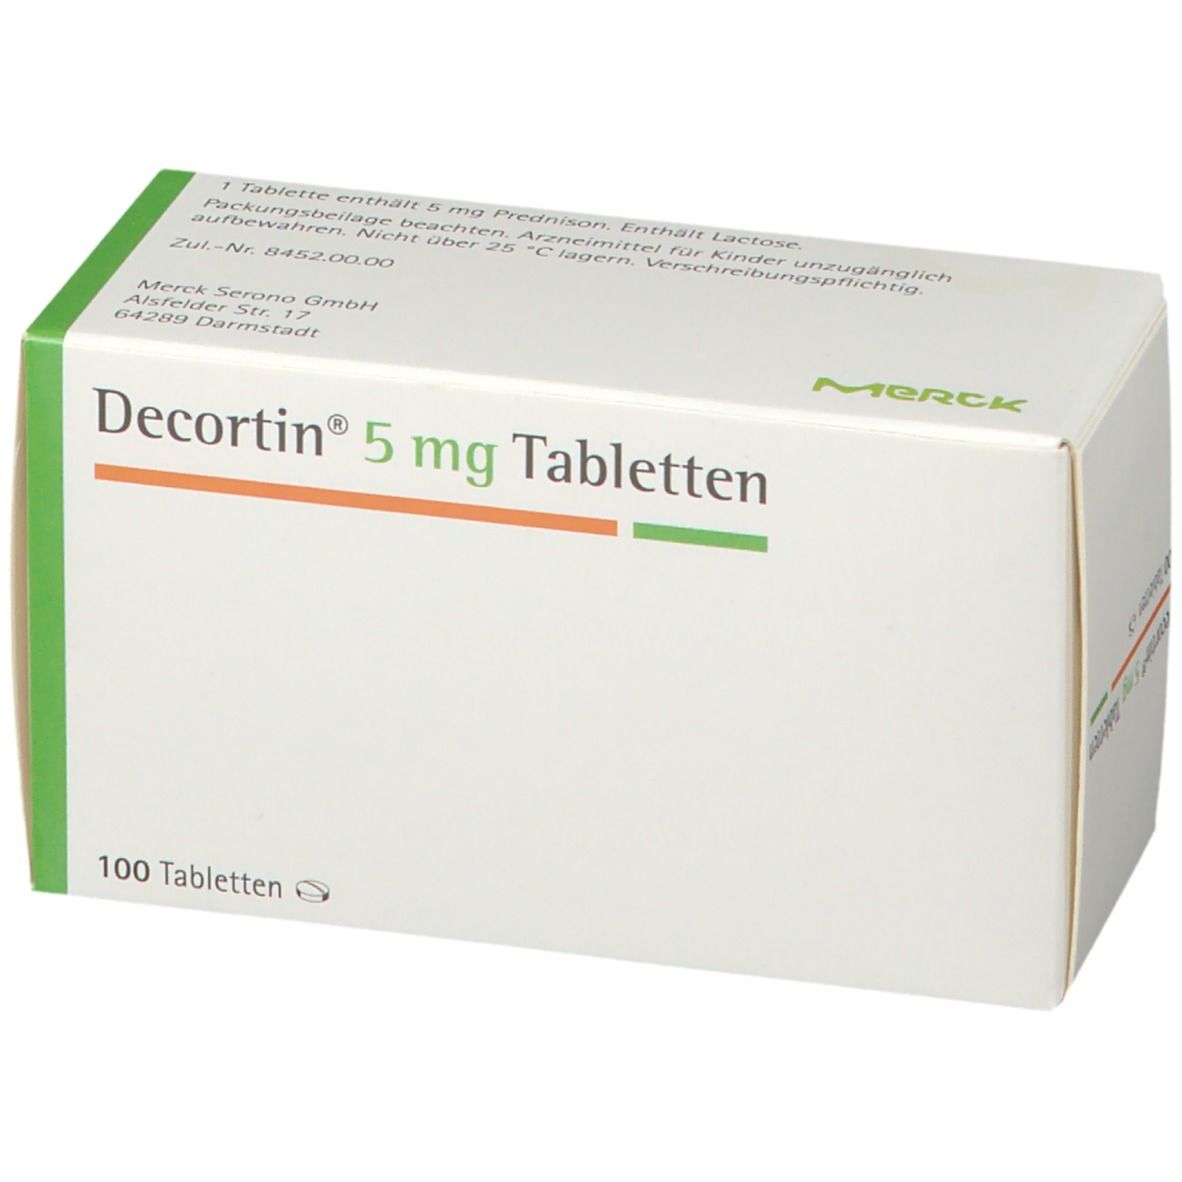 Decortin® 5 mg